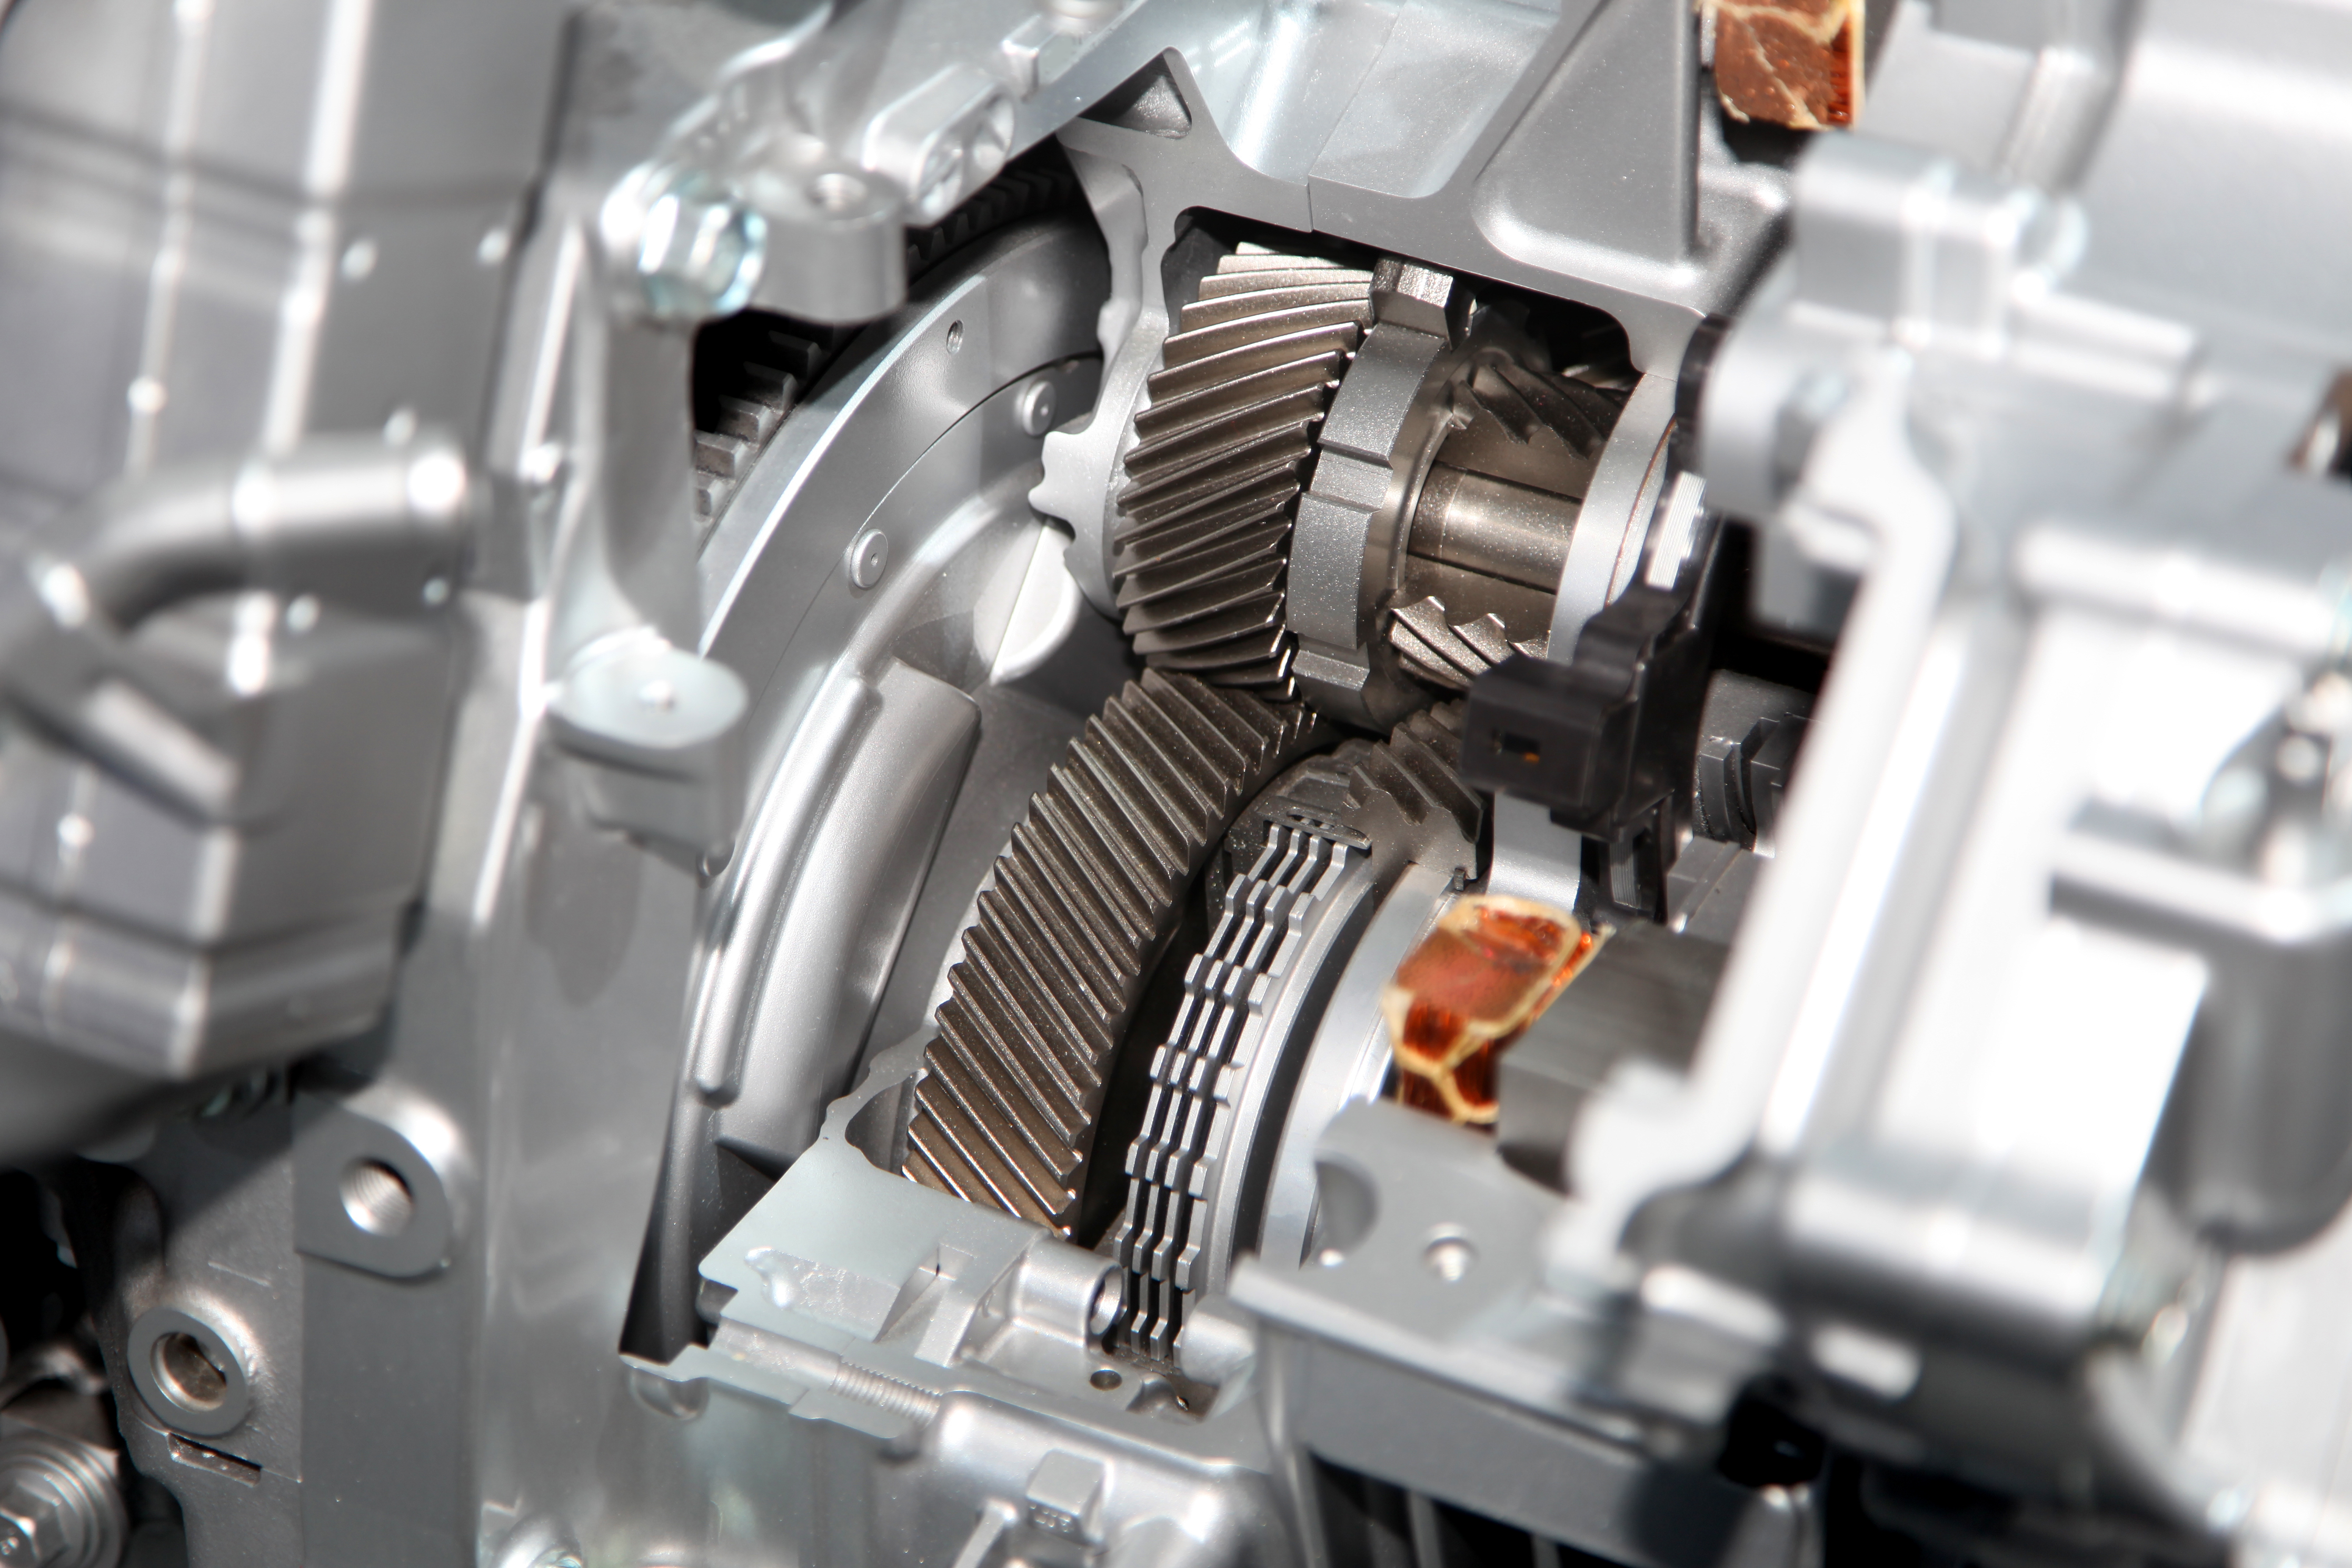 car gear train in aluminium casing inside the engine